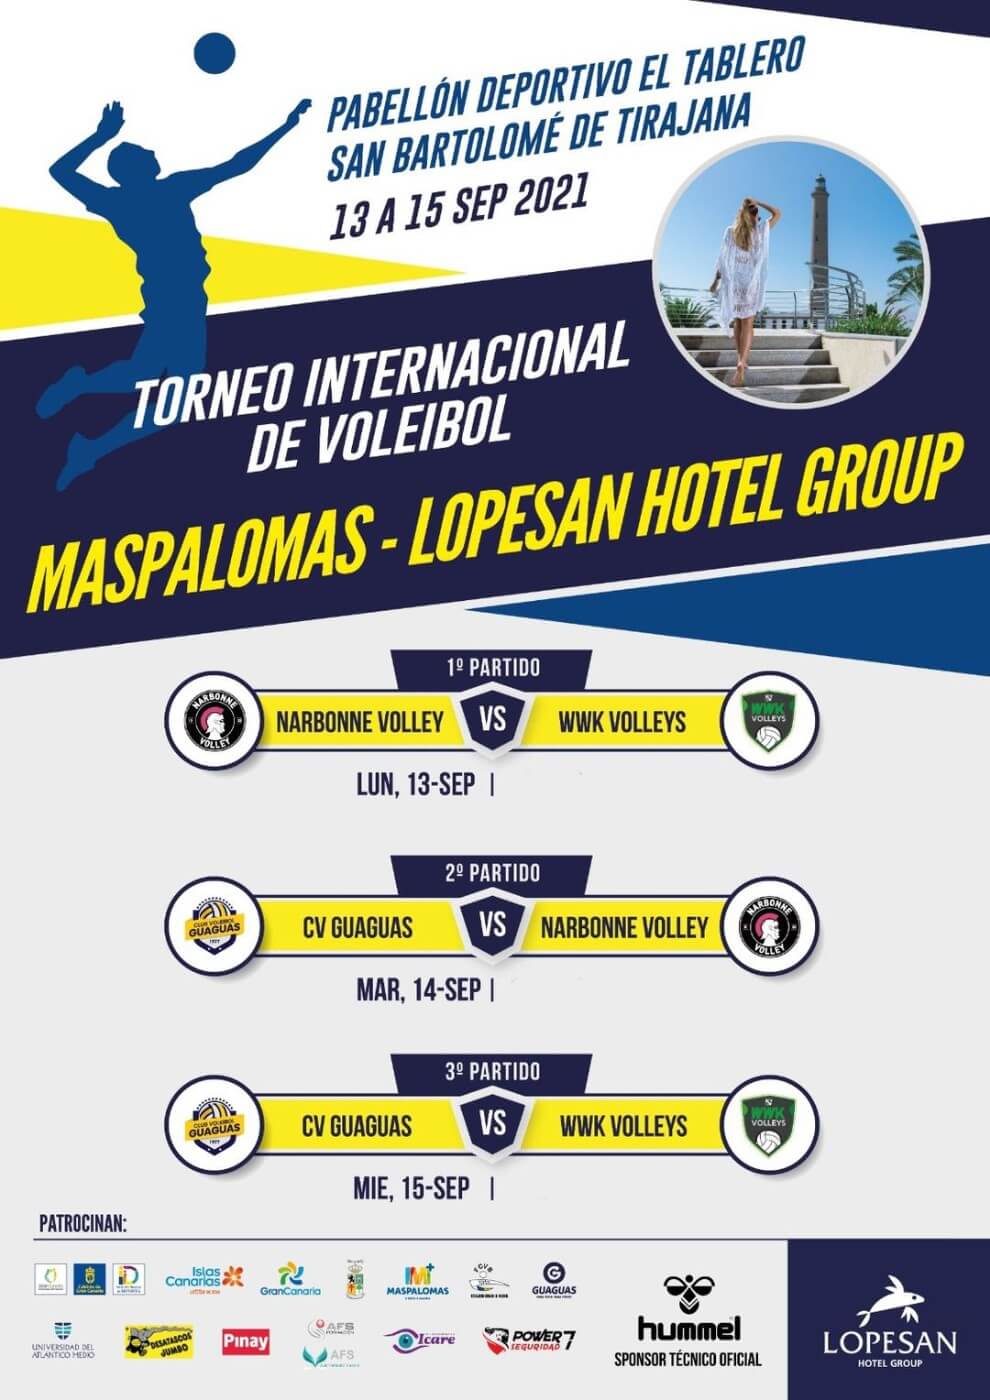 San Bartolomé de Tirajana se viste de gala para acoger el Torneo Internacional de Voleibol Maspalomas - Lopesan Hotel Group